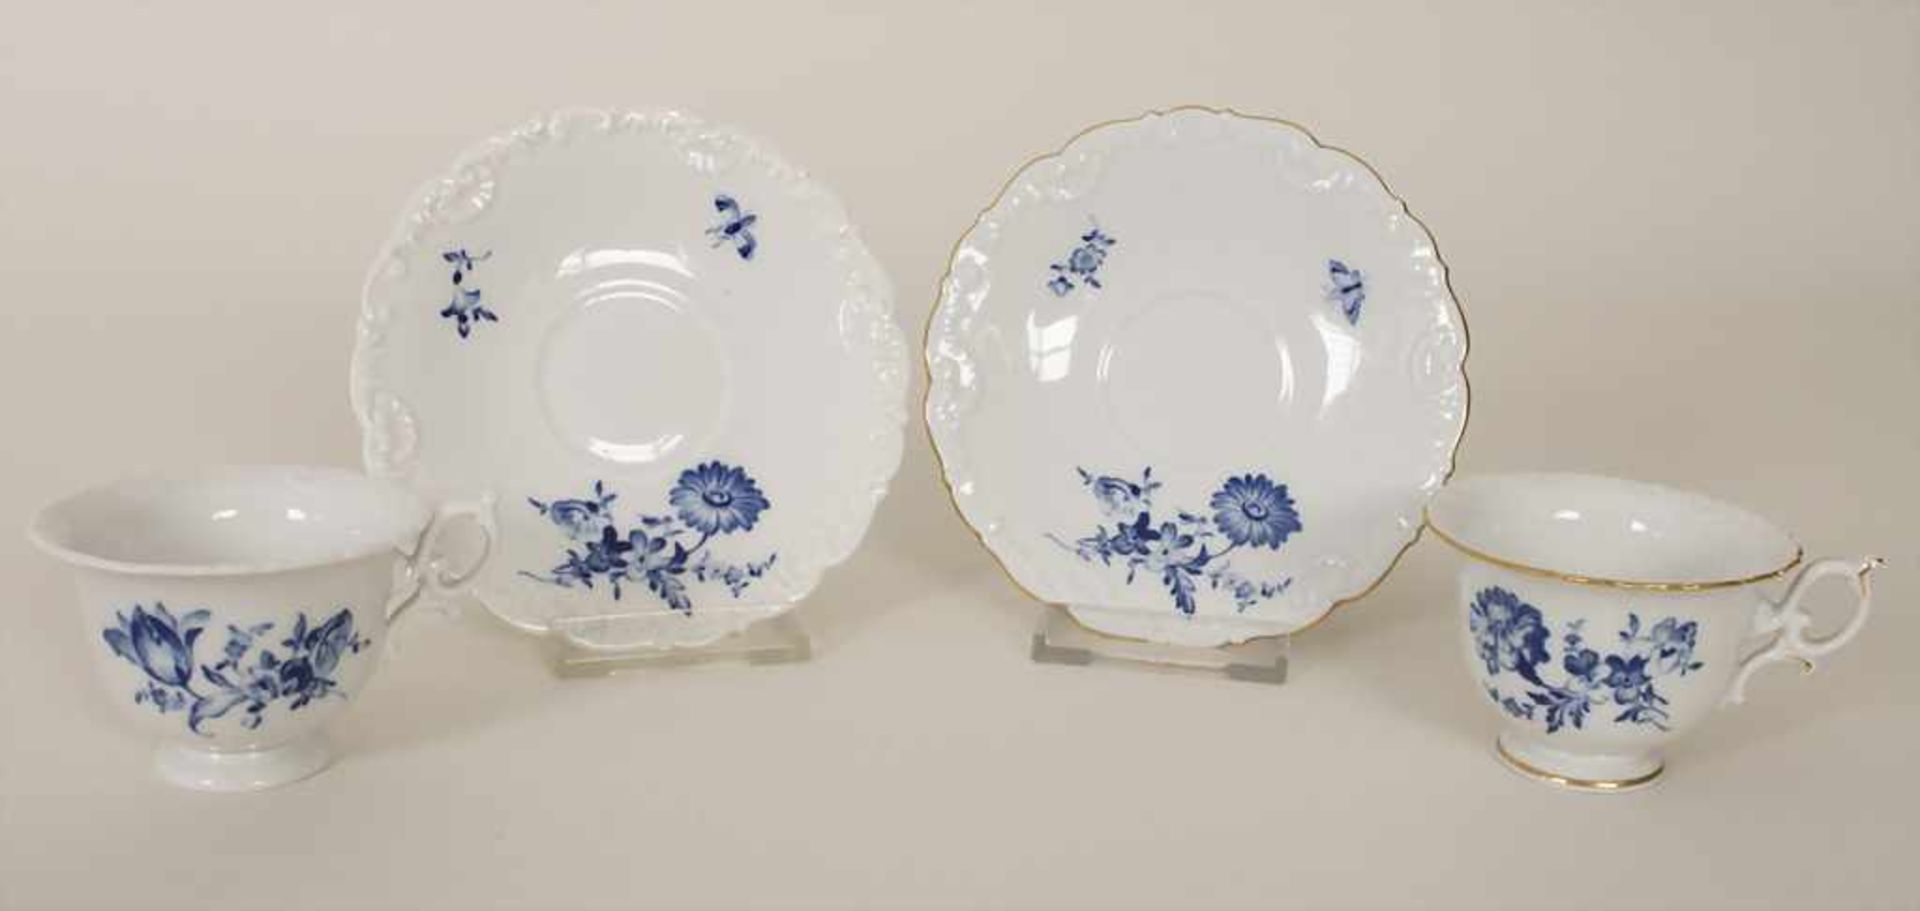 2 Mokkatassen mit Untertassen 'Blaue Blume' / A set of 2 mocha cups and saucers 'Blue Flower',